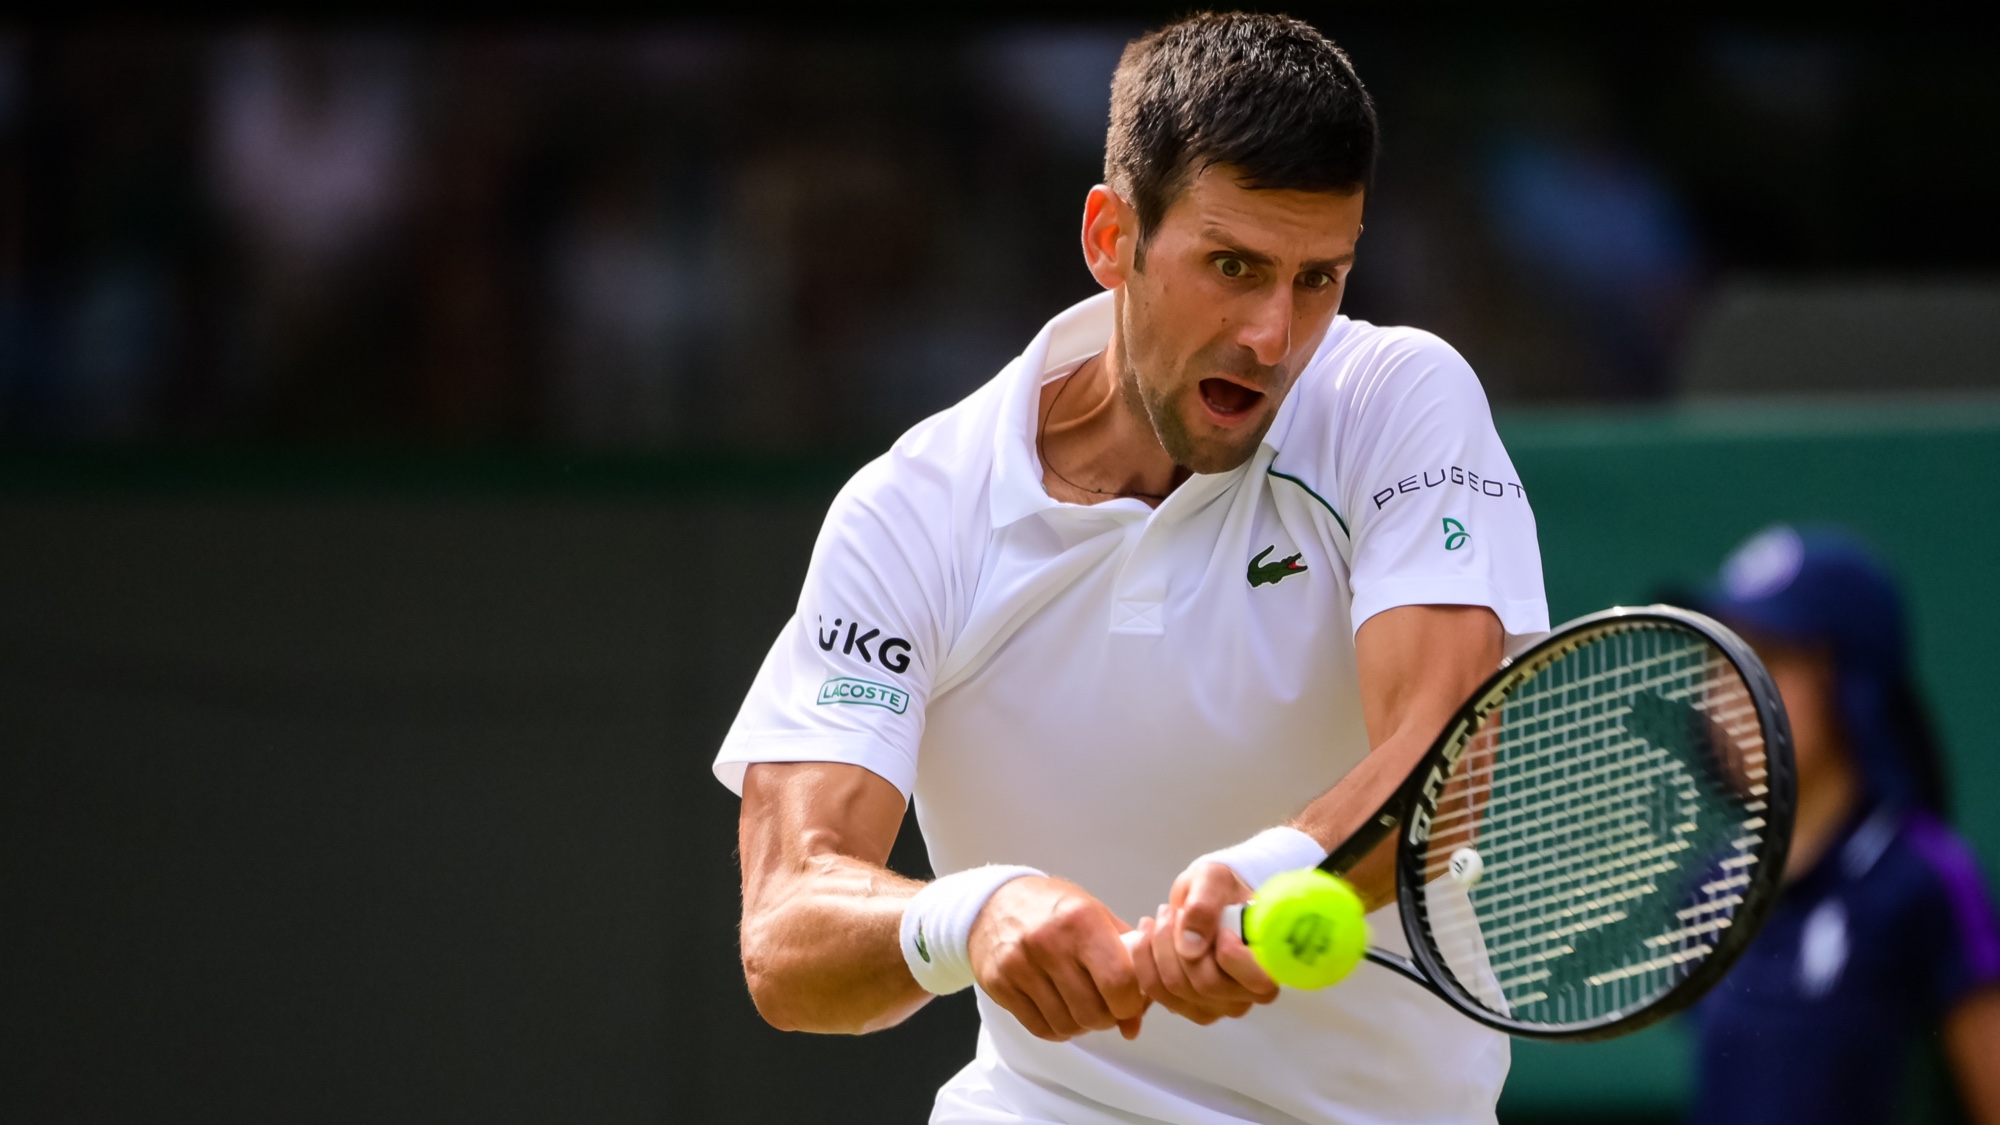 Novak Djokovic vs Cristian Garin live stream — how to watch Wimbledon match online Toms Guide